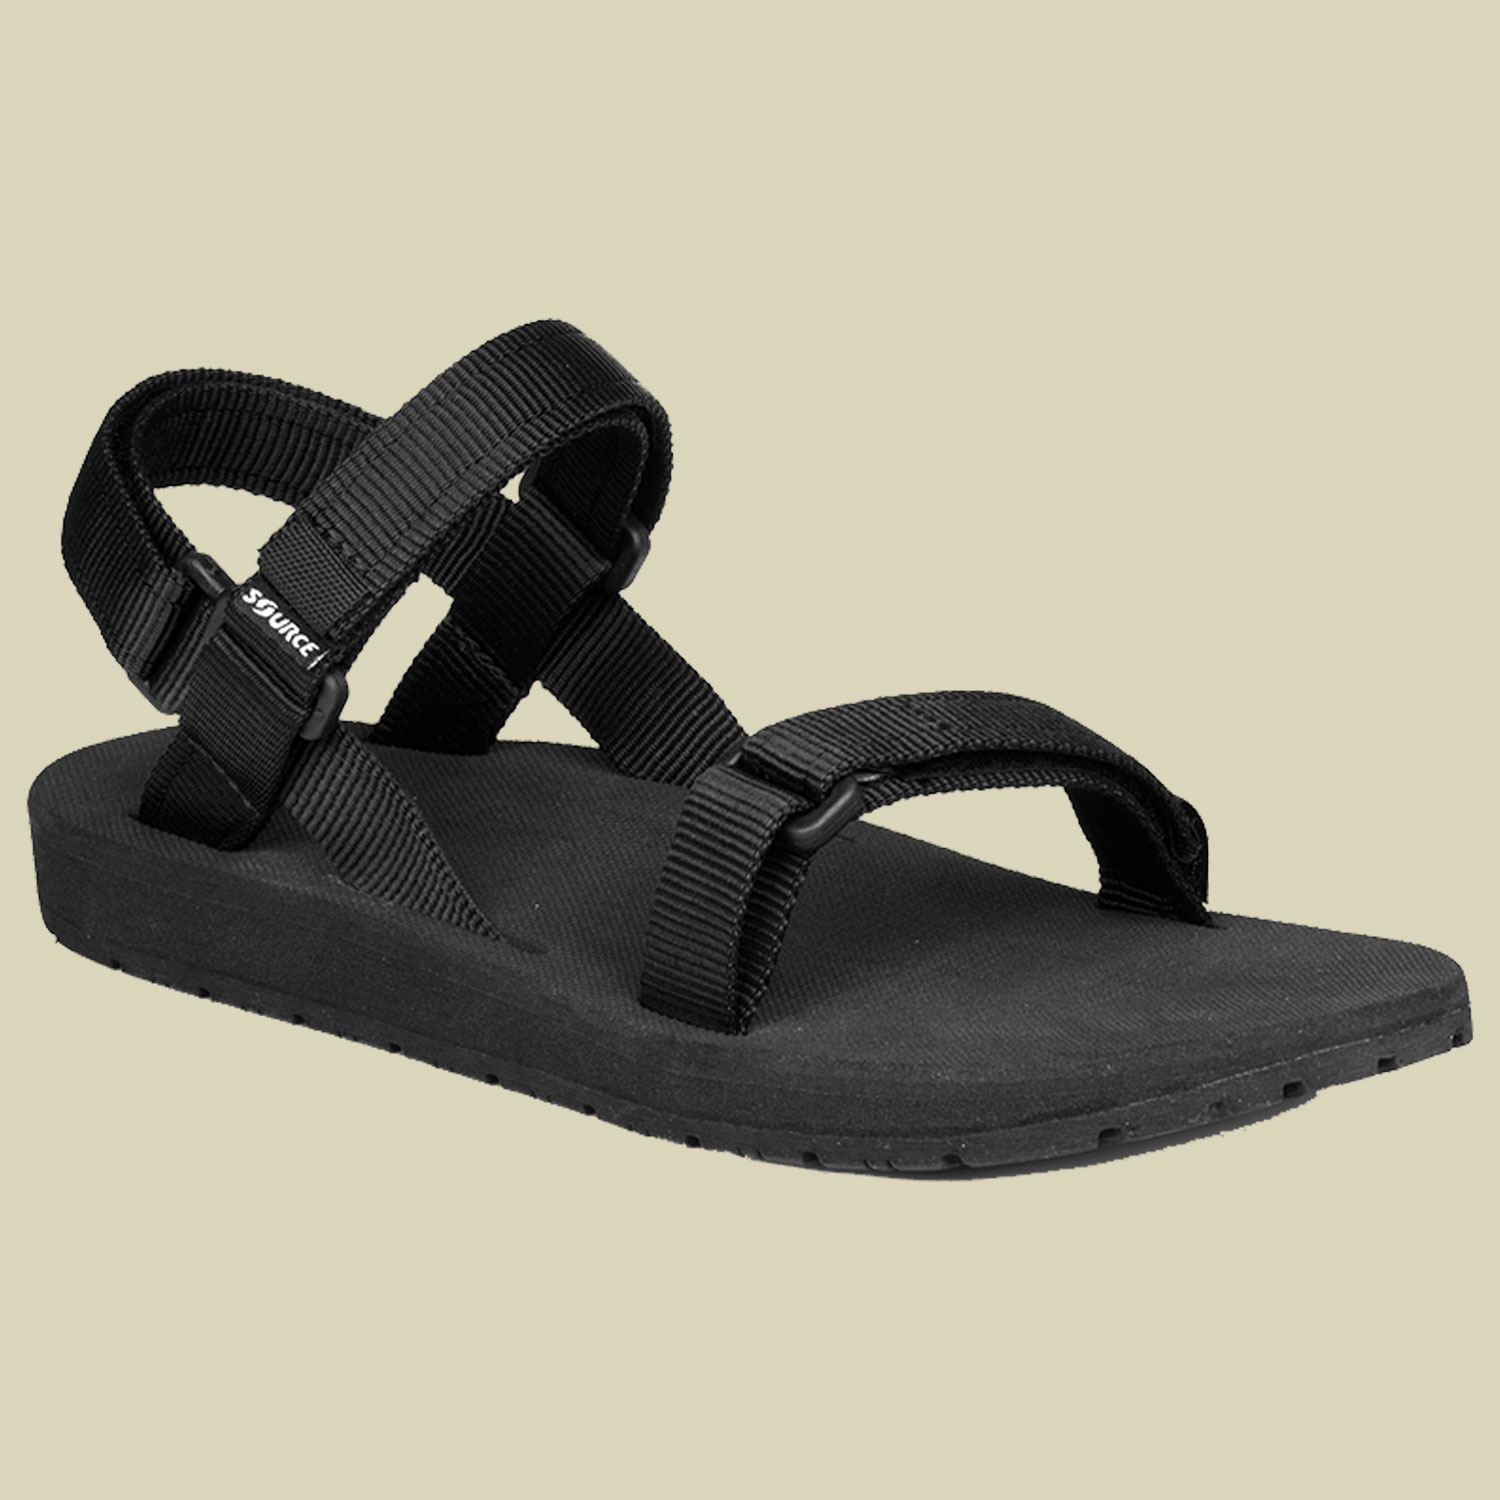 Classic Sandale Women Größe 40 Farbe black